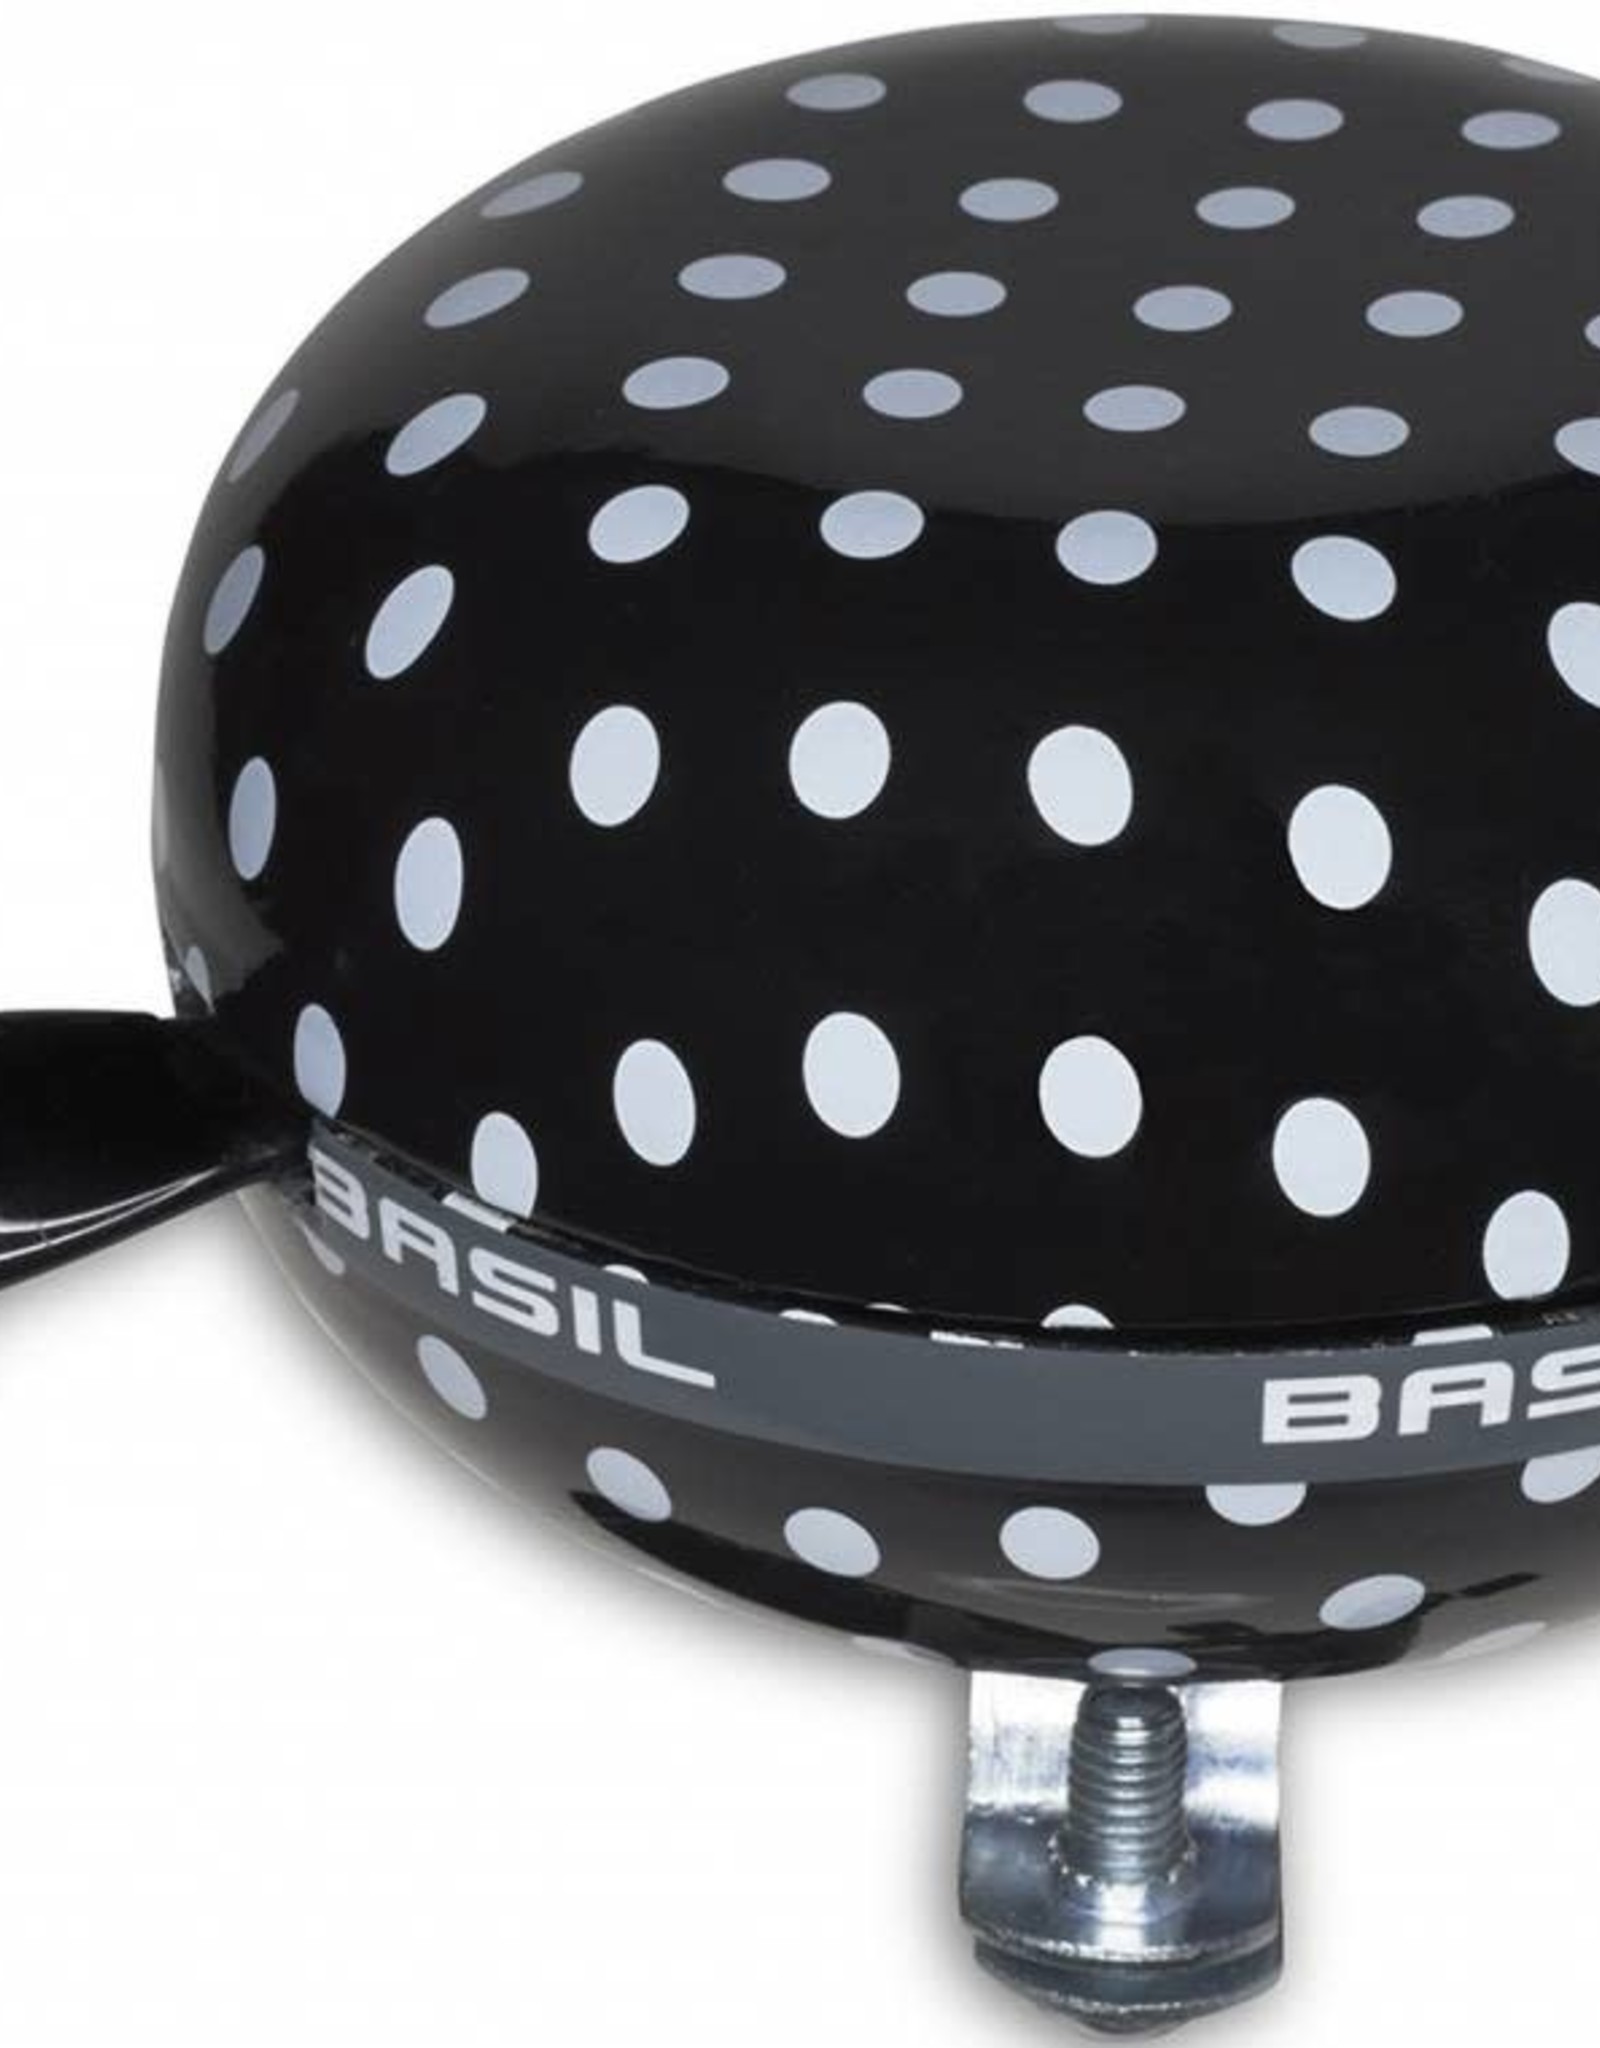 Basil Basil - Big Bell, Polkadot, Black/White dots